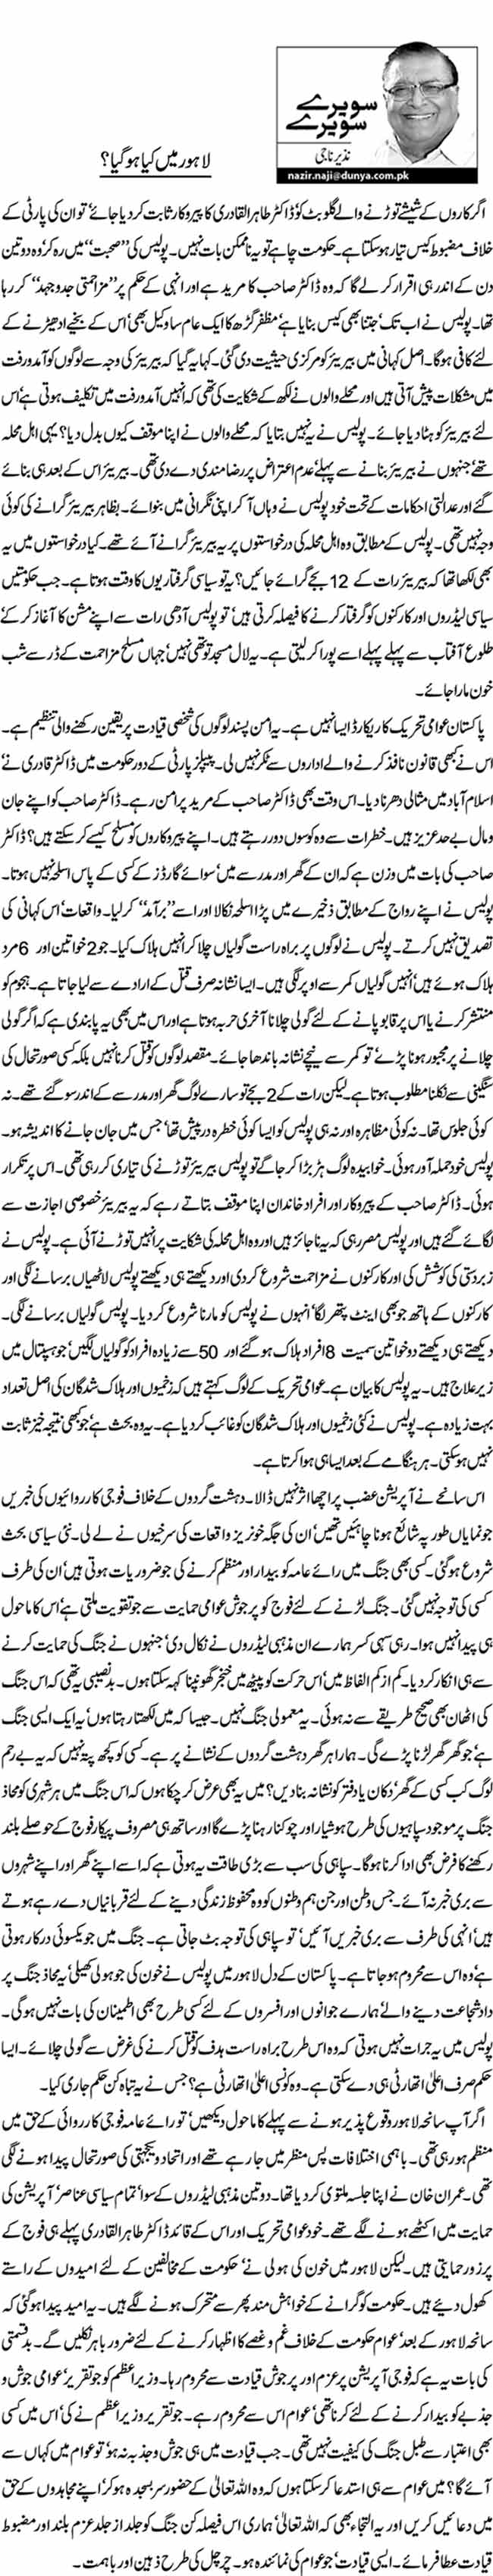 Print Media Coverage Daily Dunya - Nazir Naji